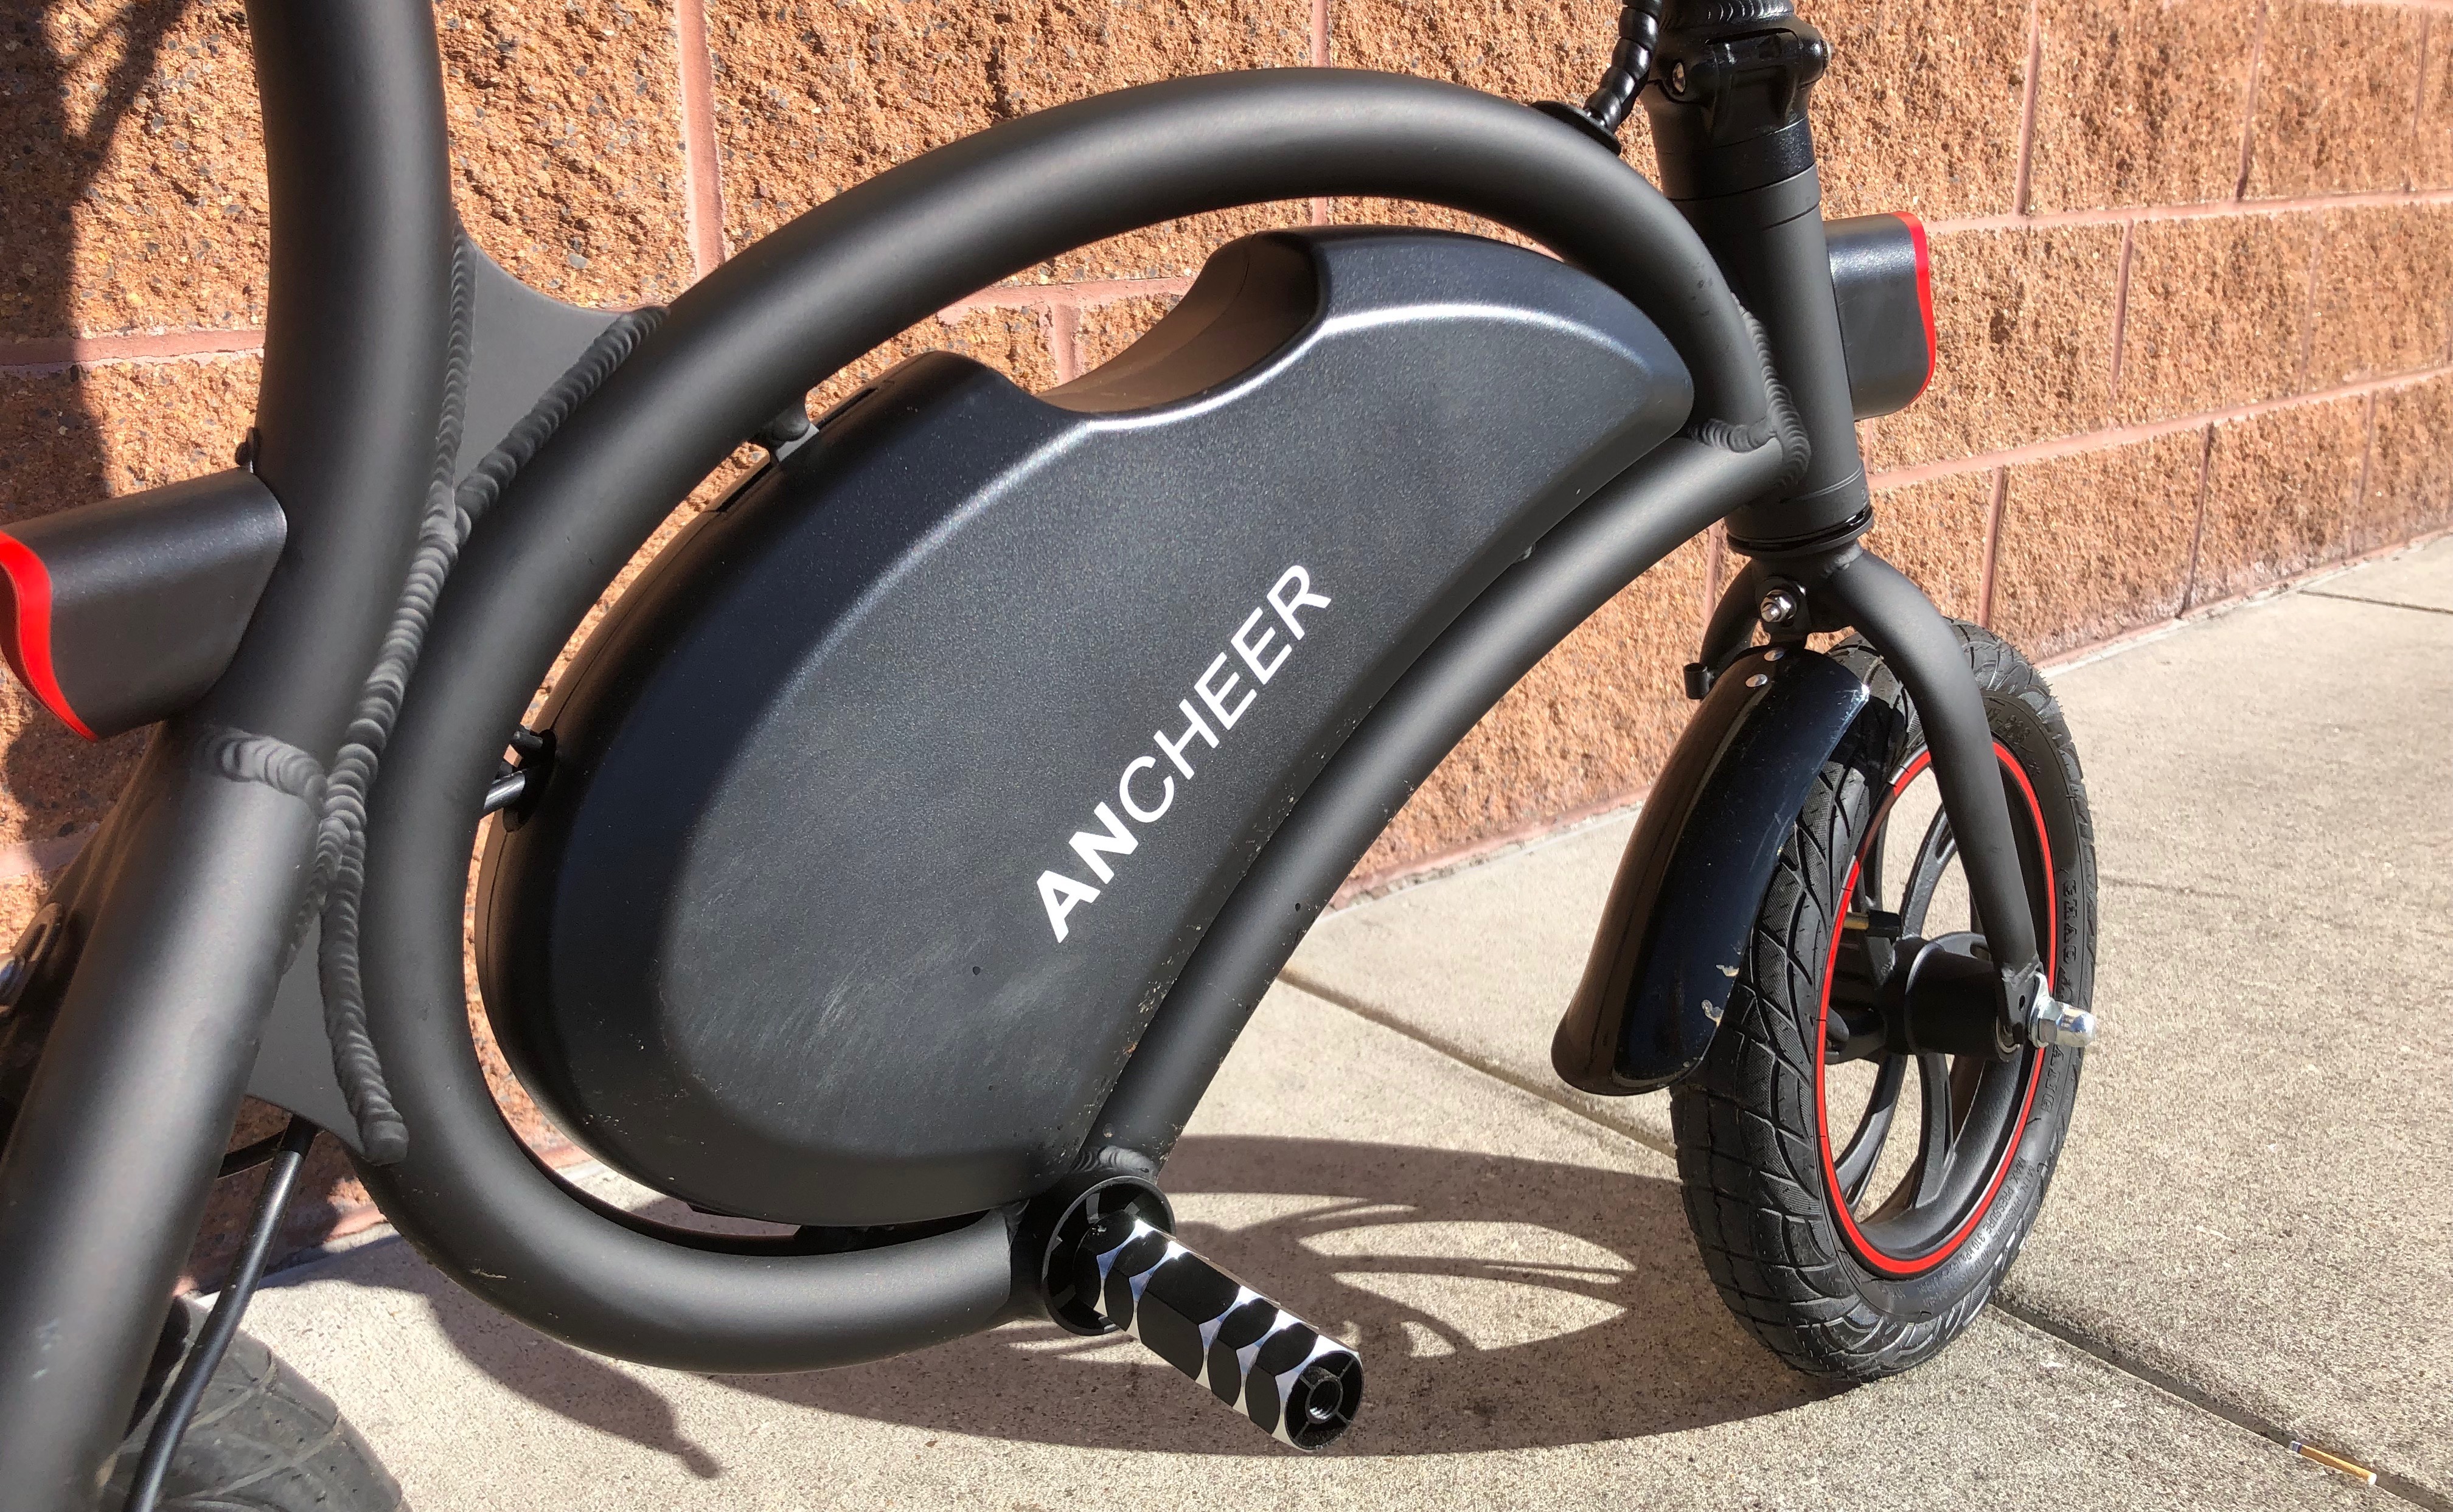 ancheer folding city commuter electric bike